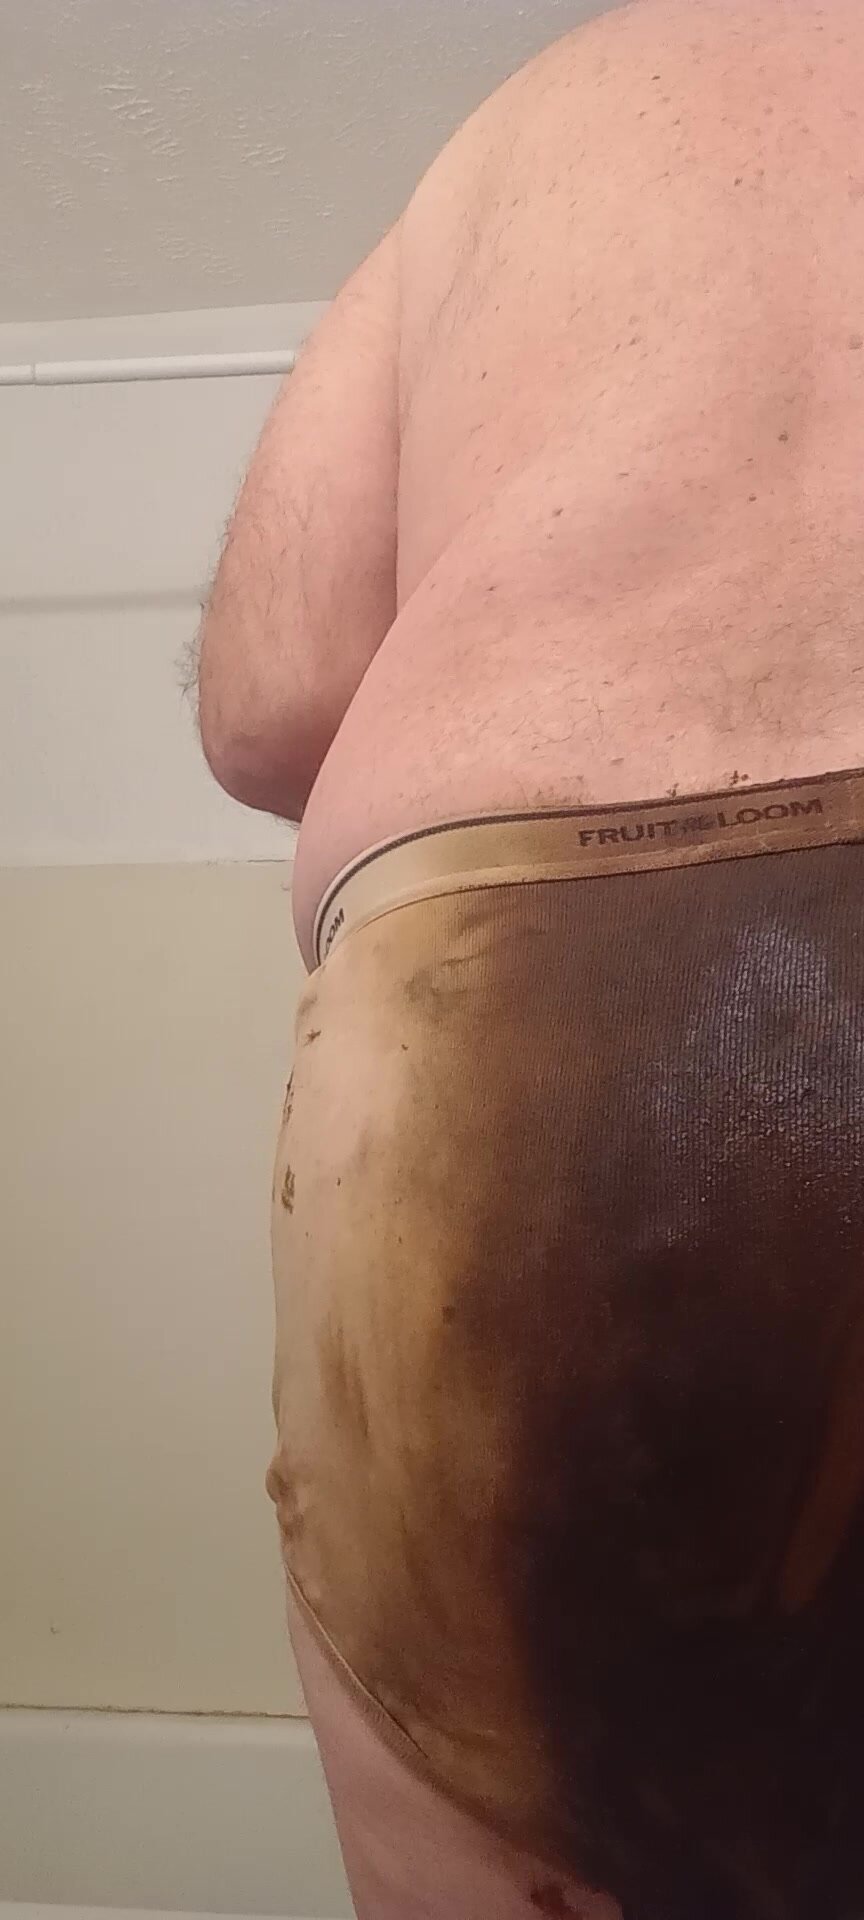 More shit in my shitty underwear